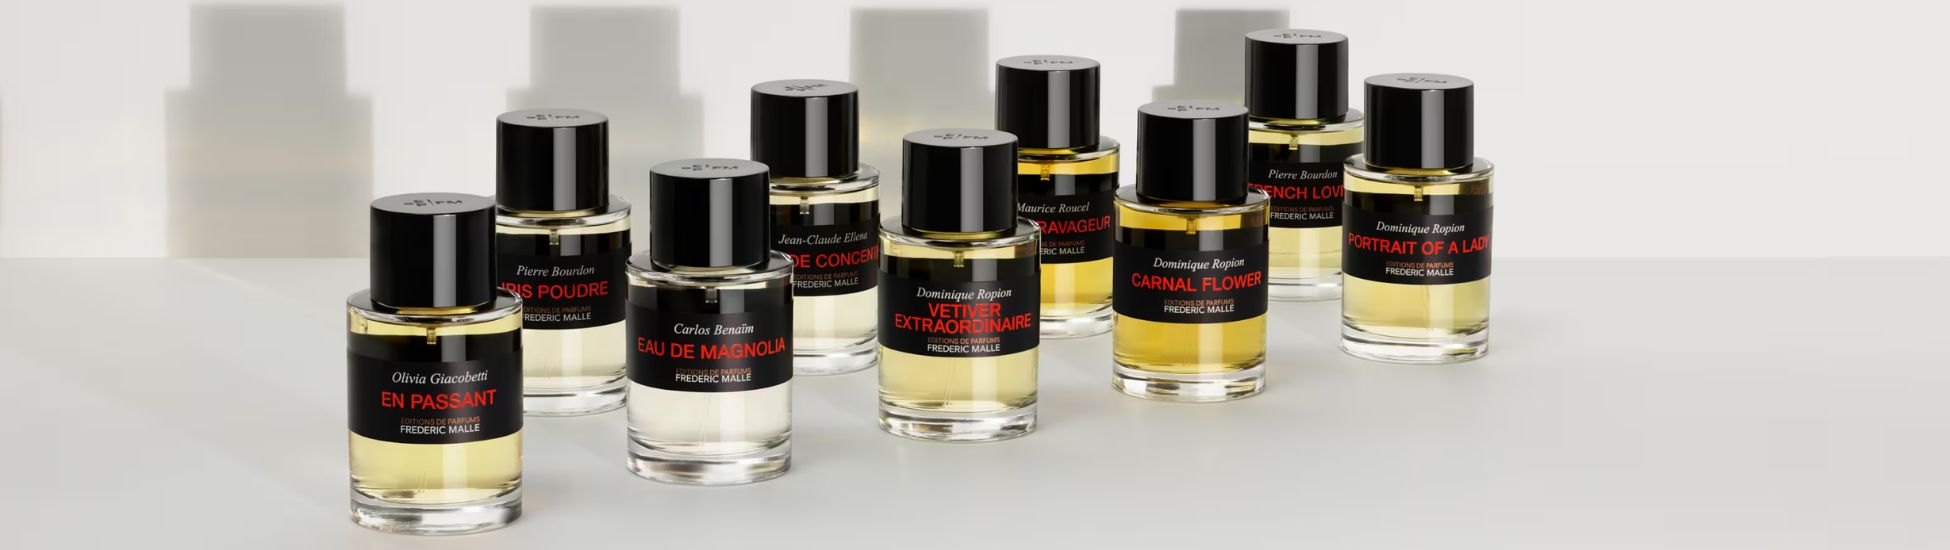 Editions de Parfums - Frederic Malle